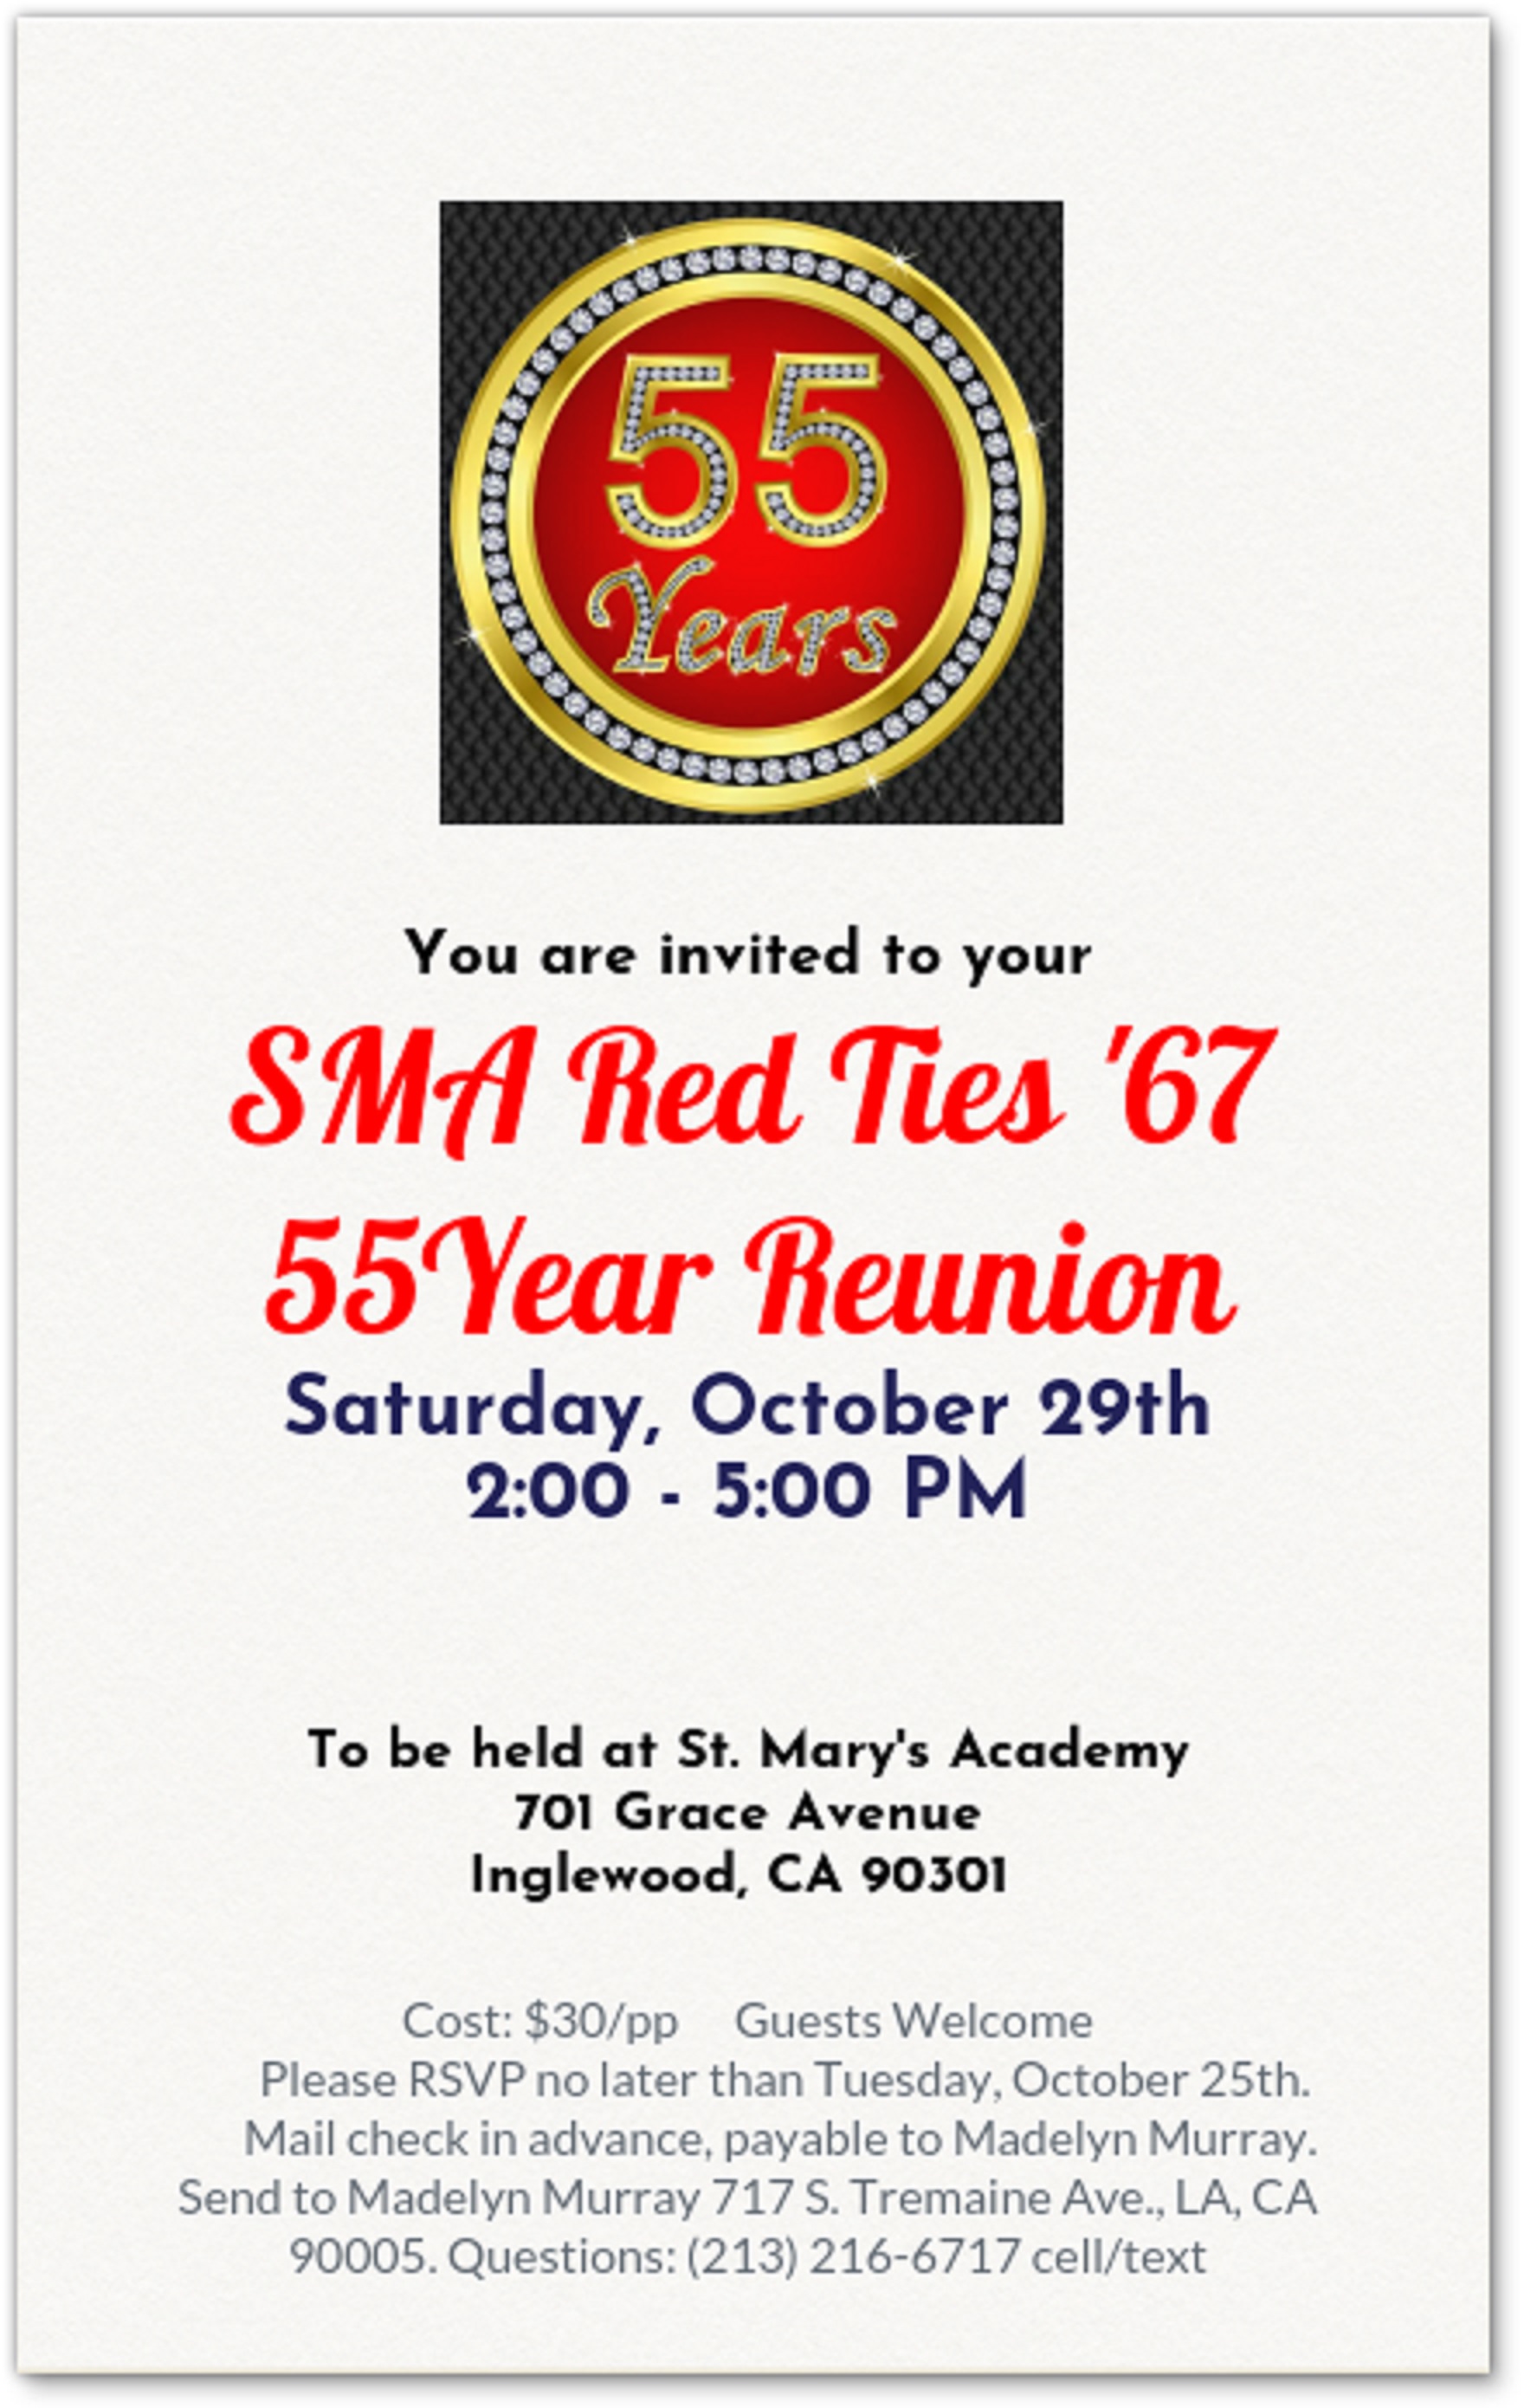 Red Tie 1967 Reunion Flyer